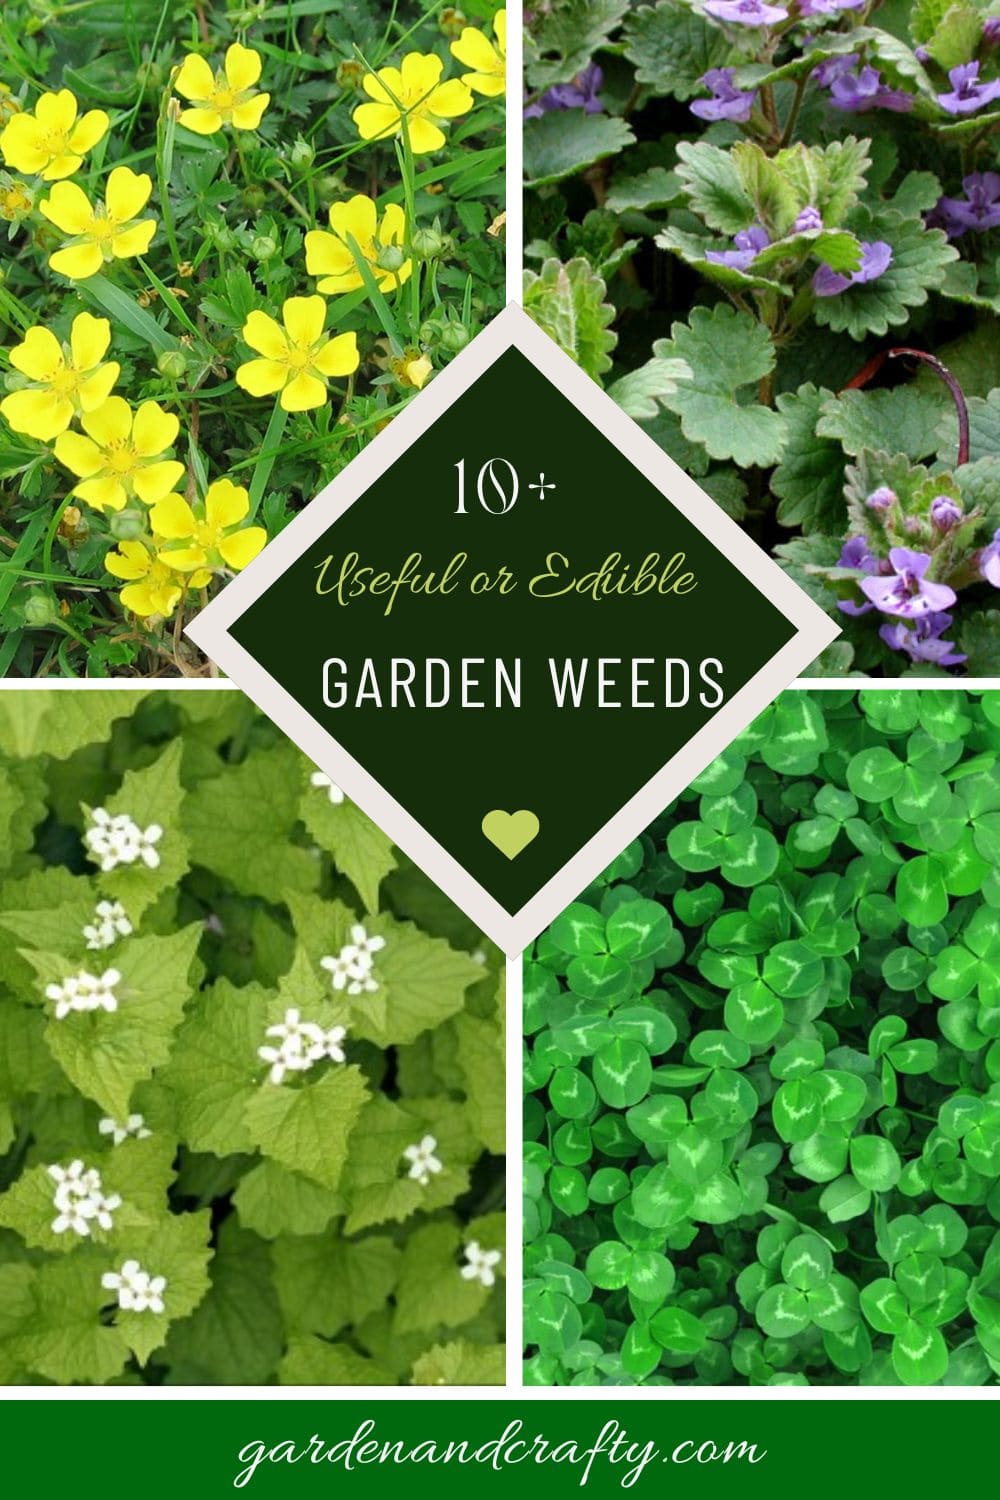 15 Useful or Edible Garden Weeds